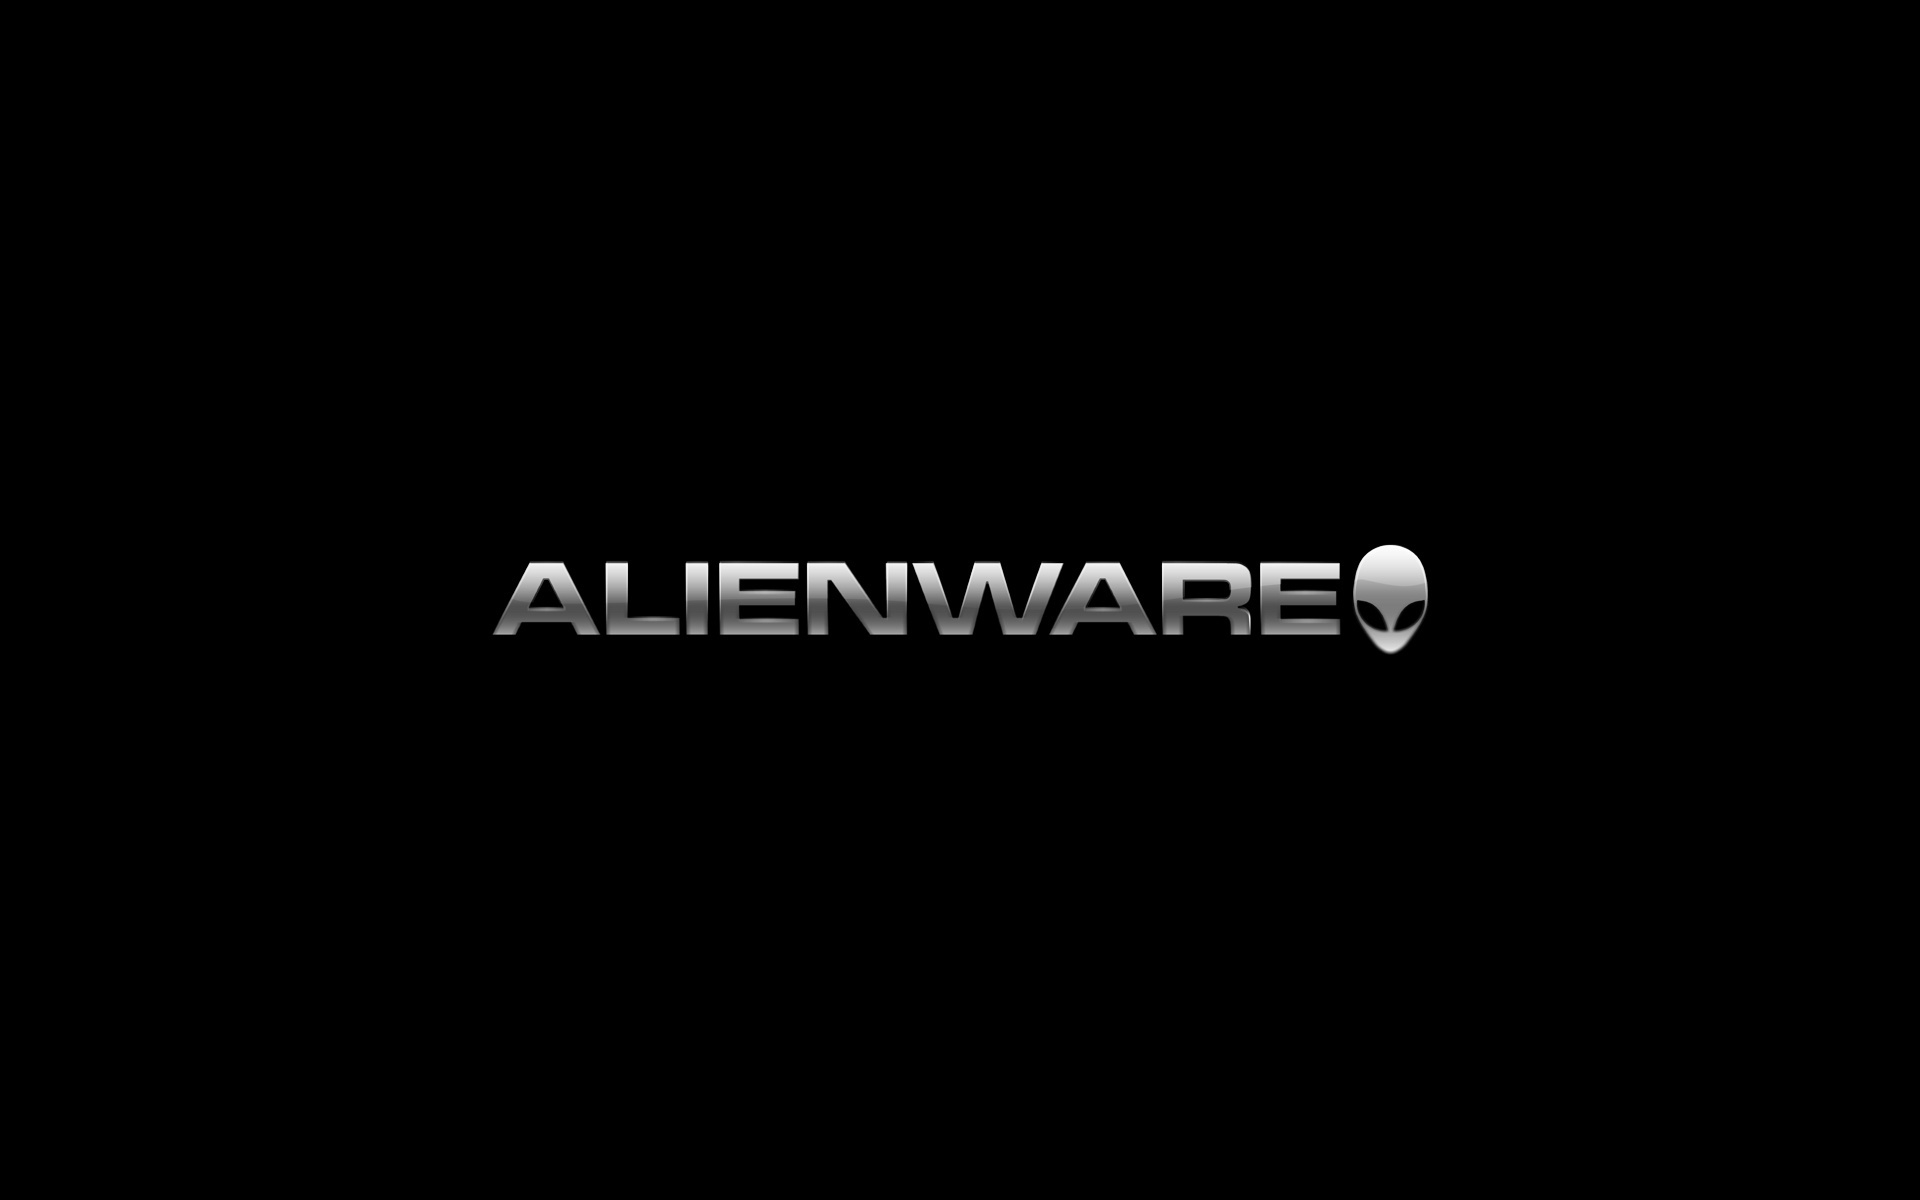 Black Alienware for 1920 x 1200 widescreen resolution